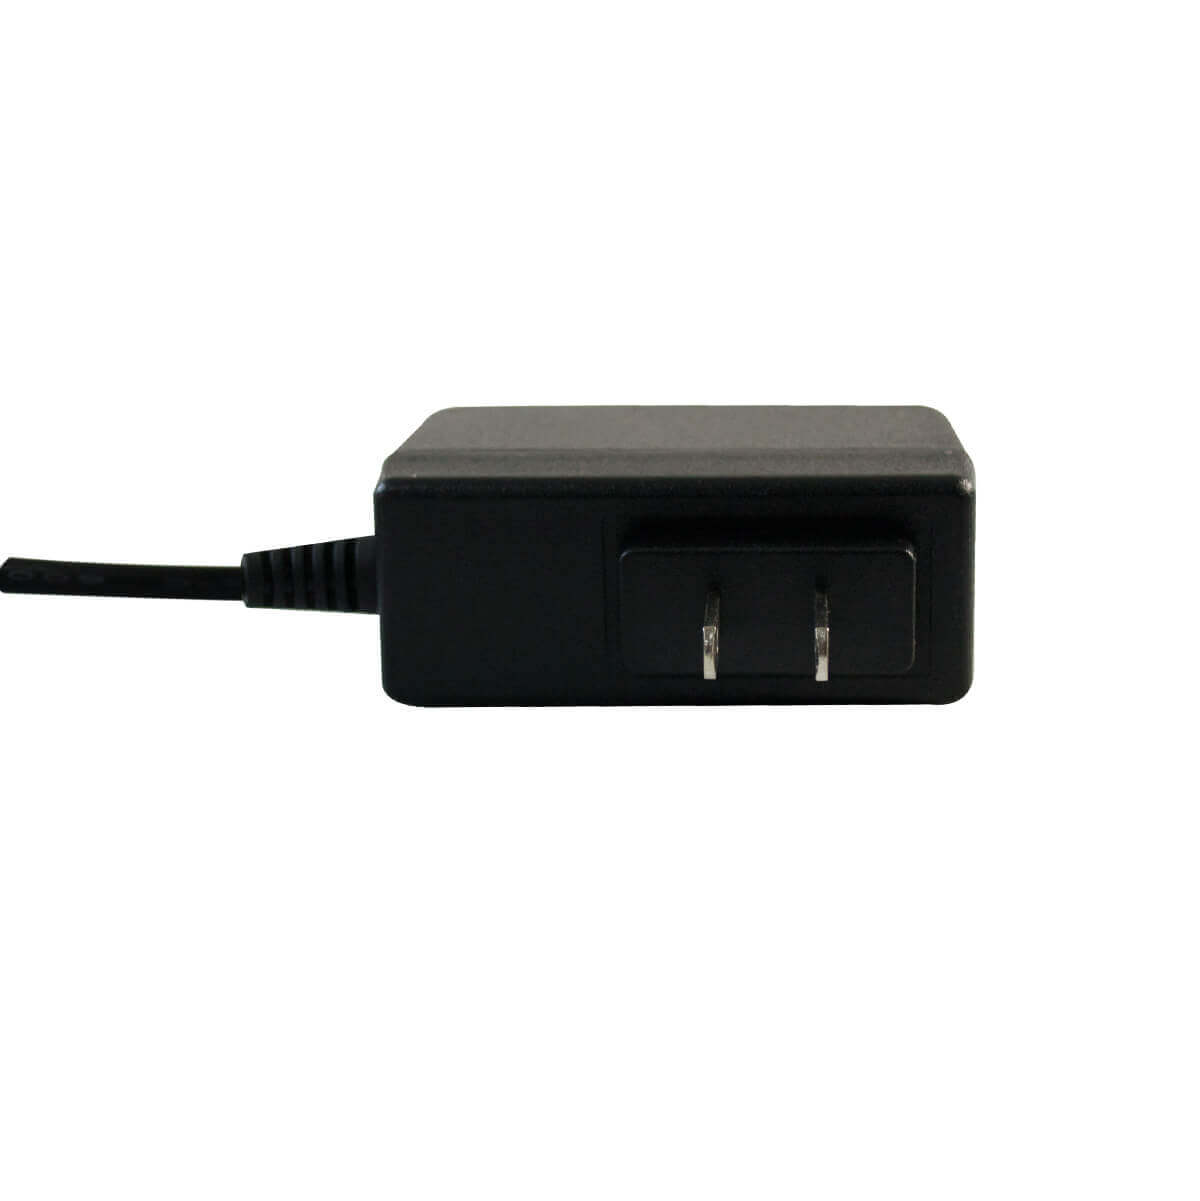 Conector Plug de alimentacion de 2.1mm, macho para 12V DC - Linemak